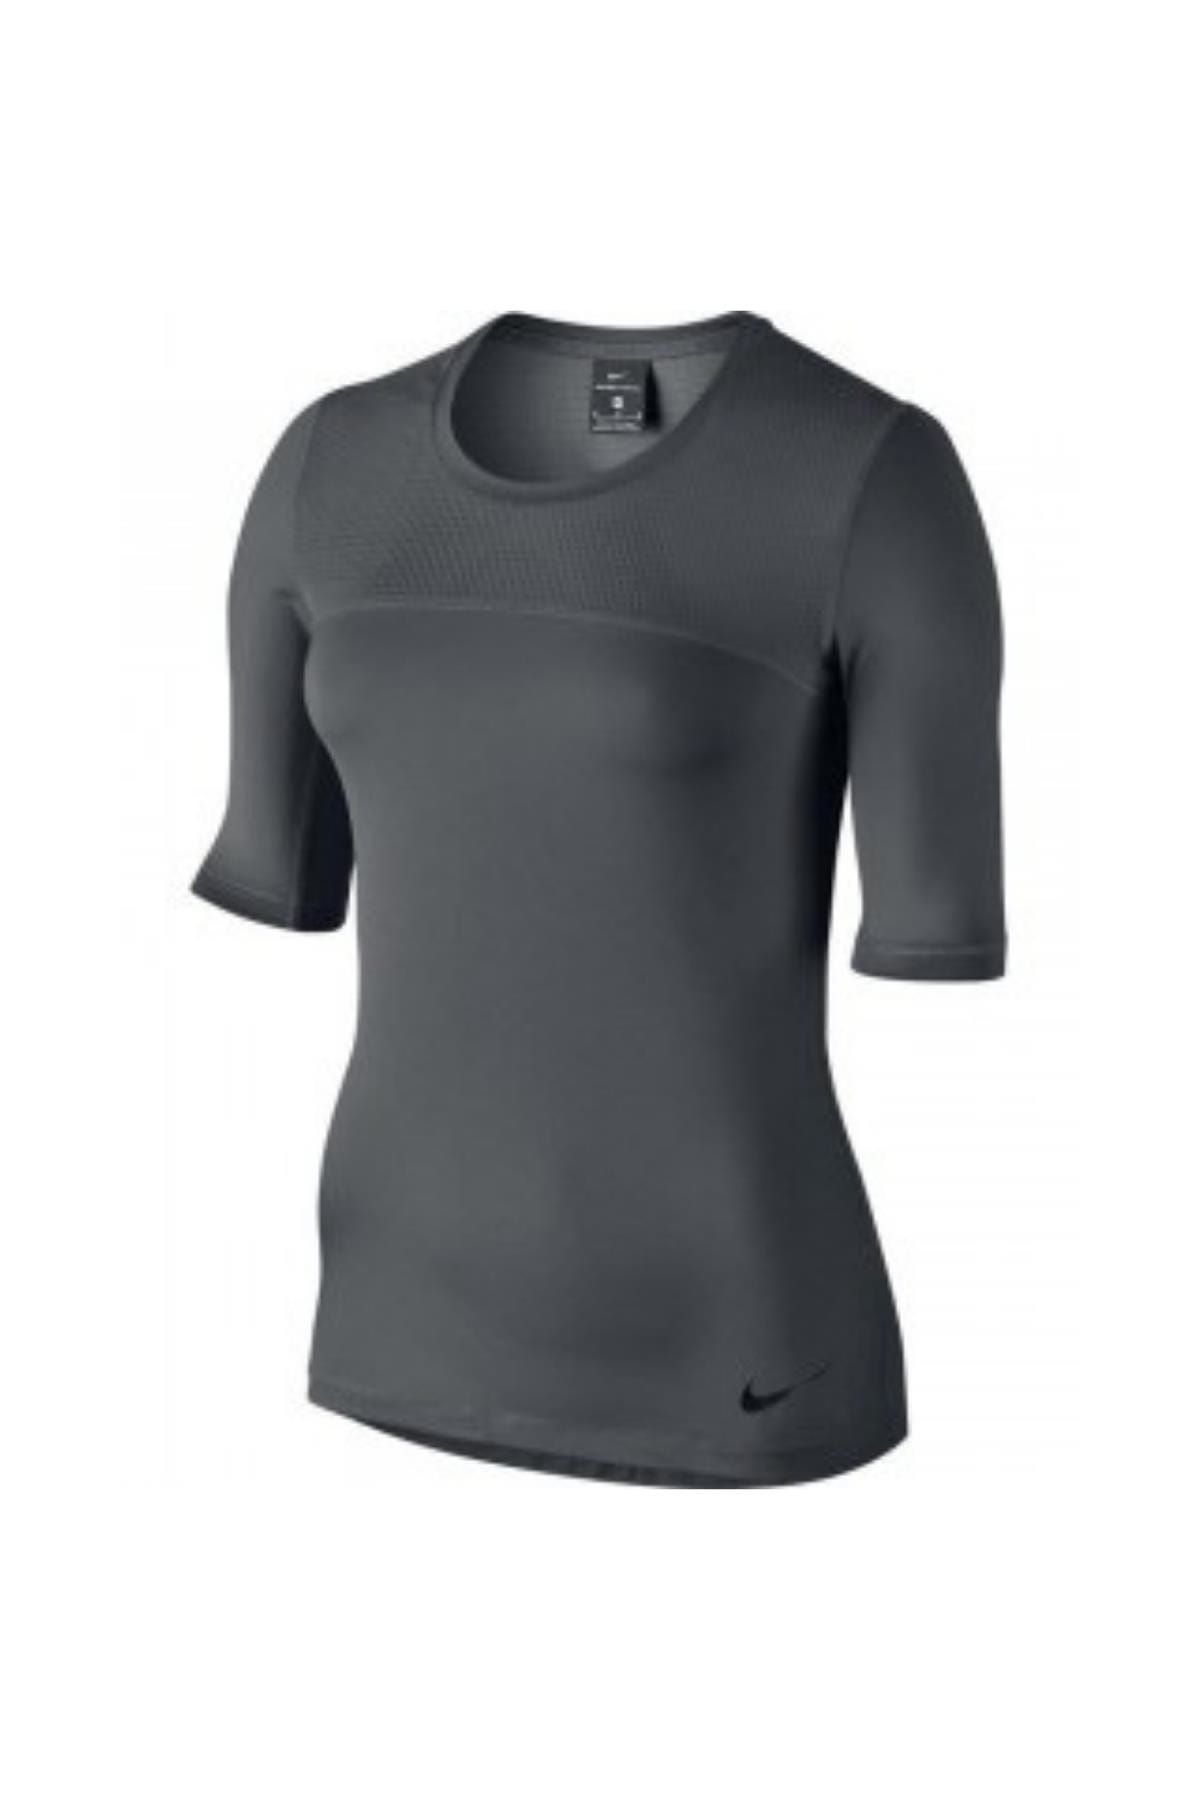 Nike Kadın T-Shirt -  Pro Hypercool 832054-021 Tişört - 832054-021